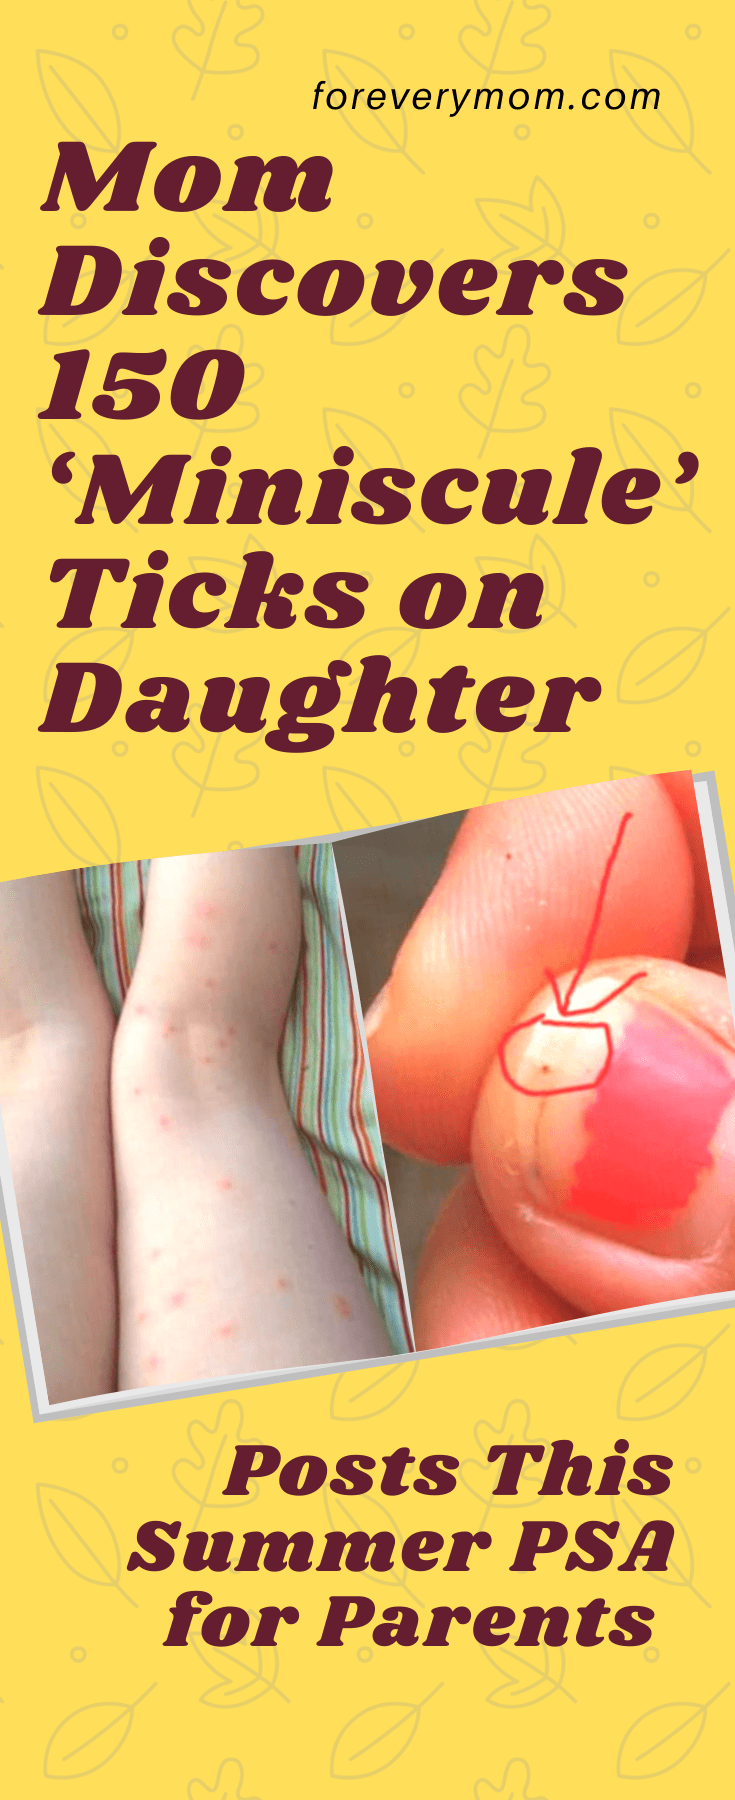 Ticks on Daughter